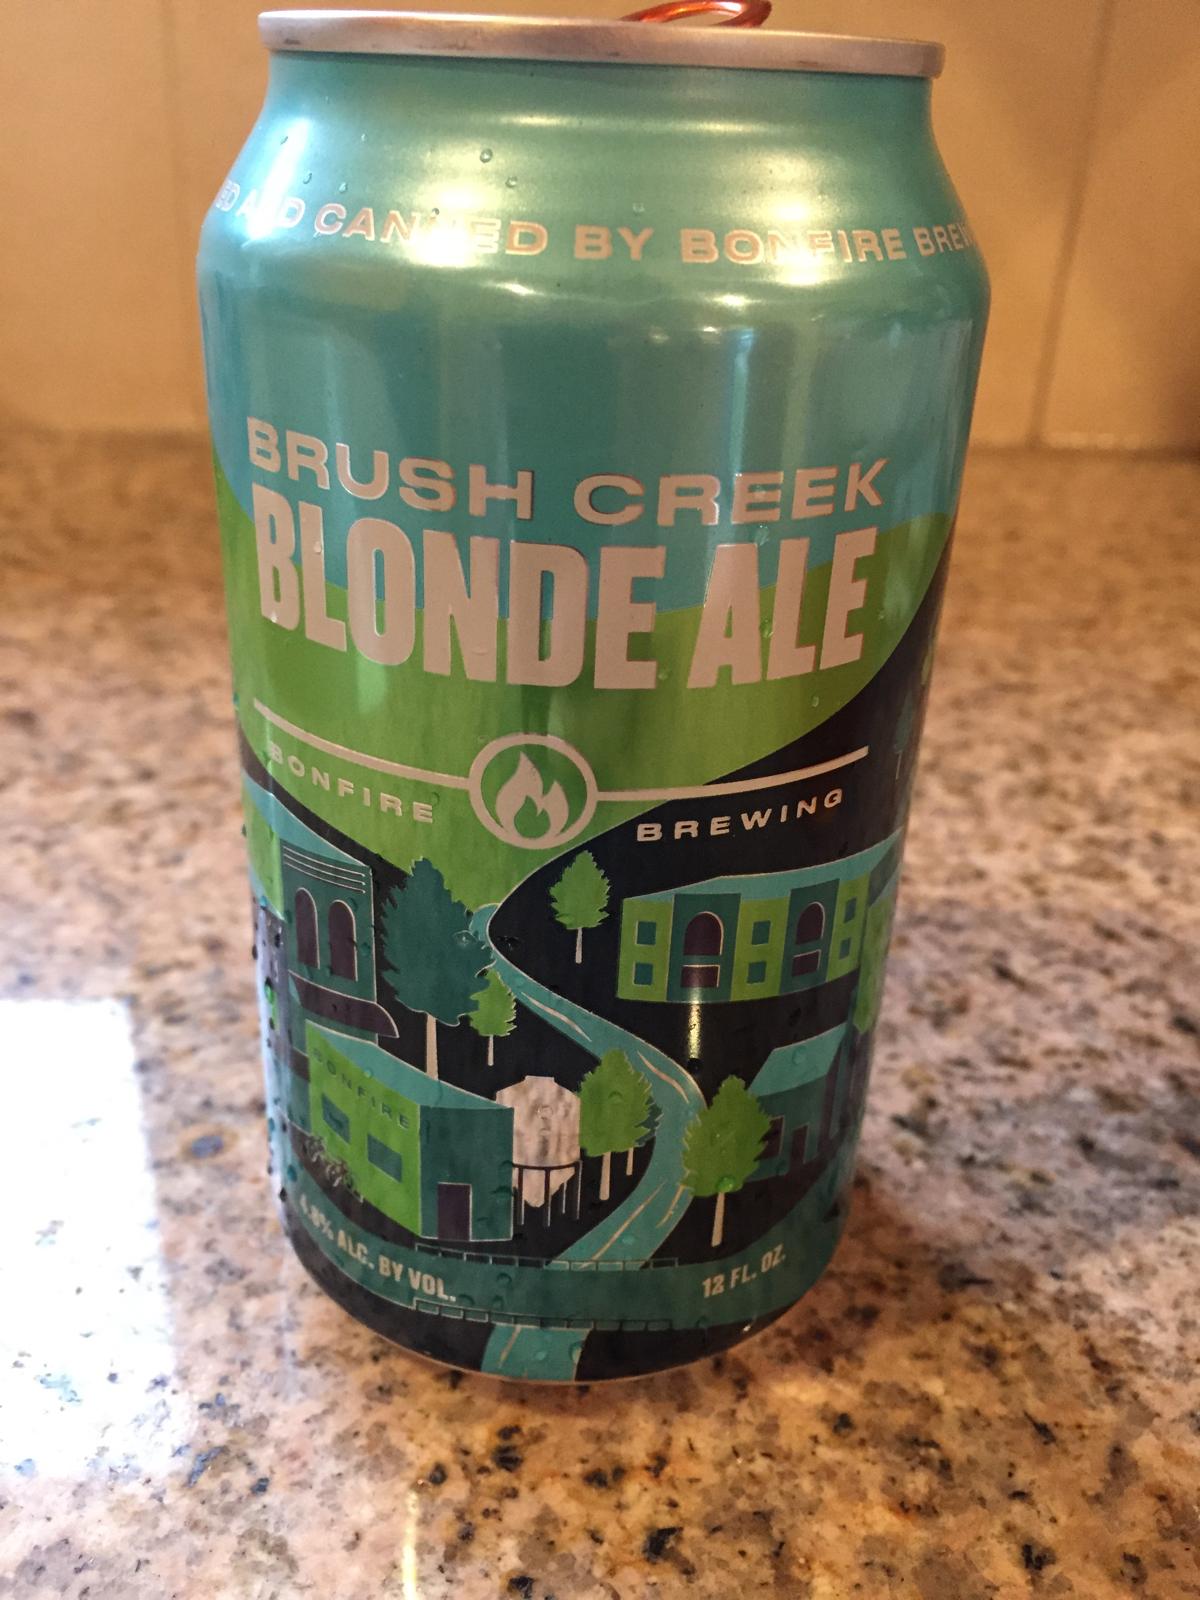 Brush Creek Blonde Ale